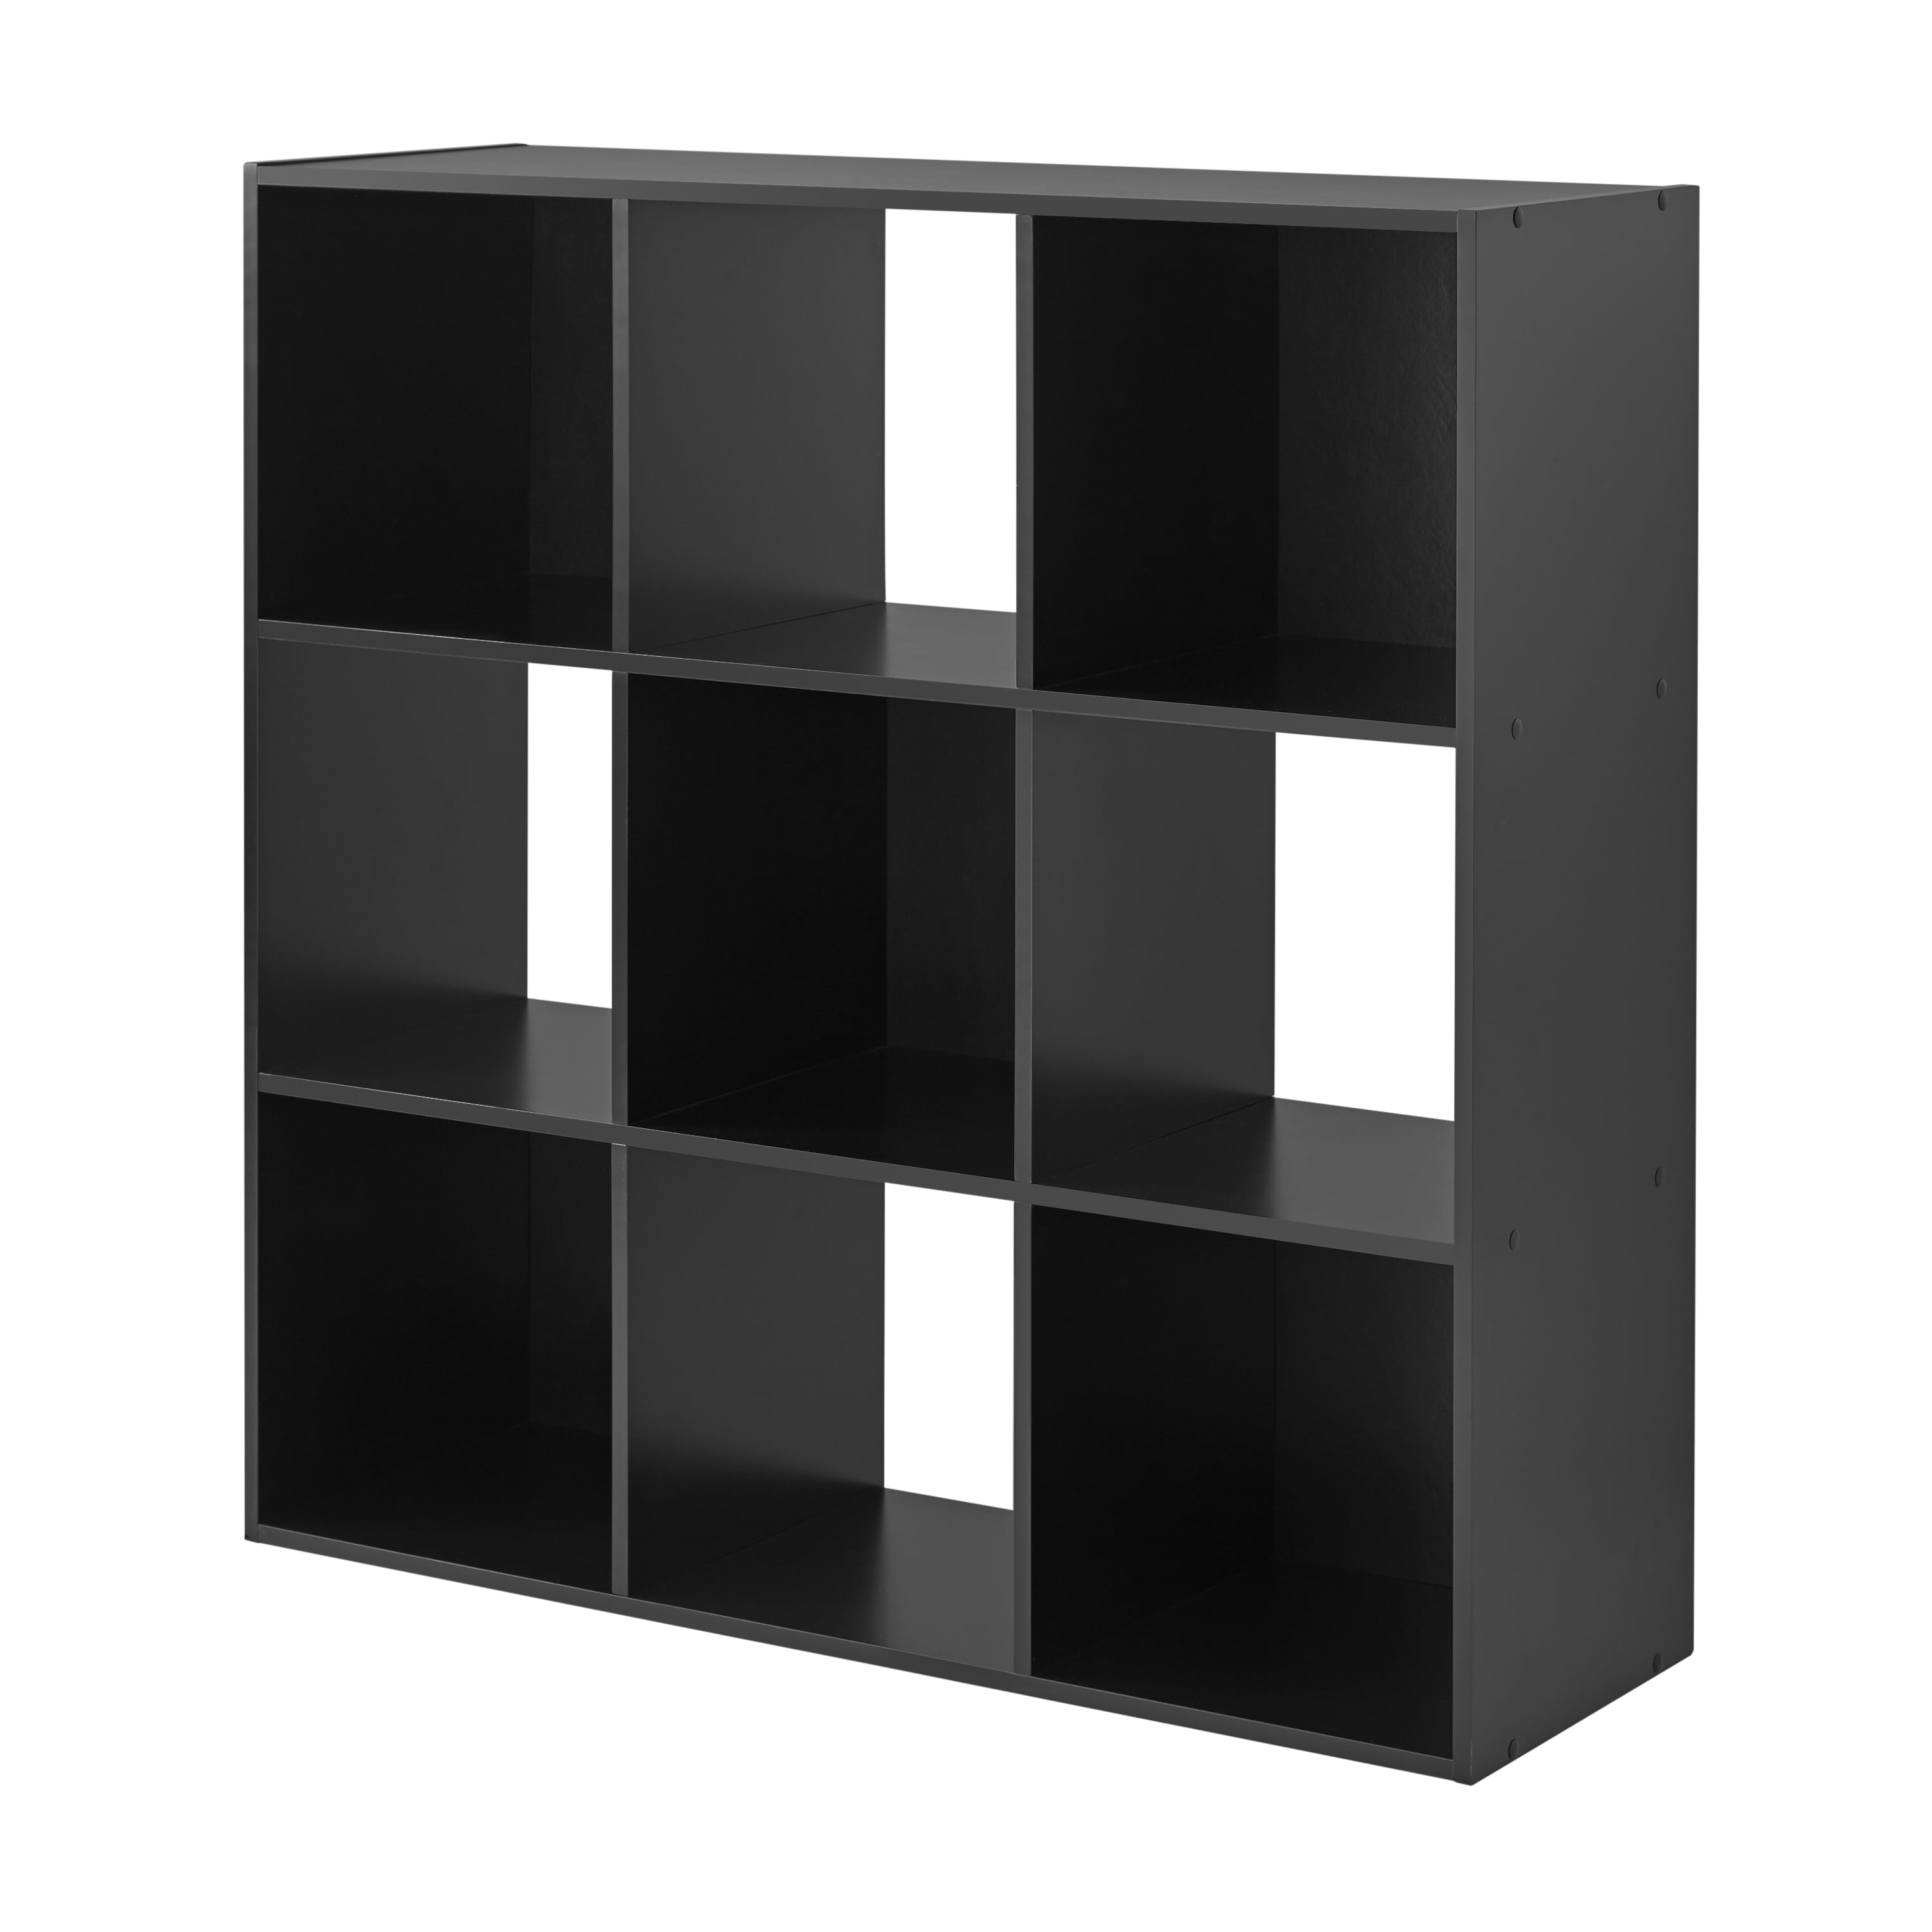 Multifunctional Assembled 3 Tiers 9 Compartments Storage Shelf Black  bedroom storage shelves